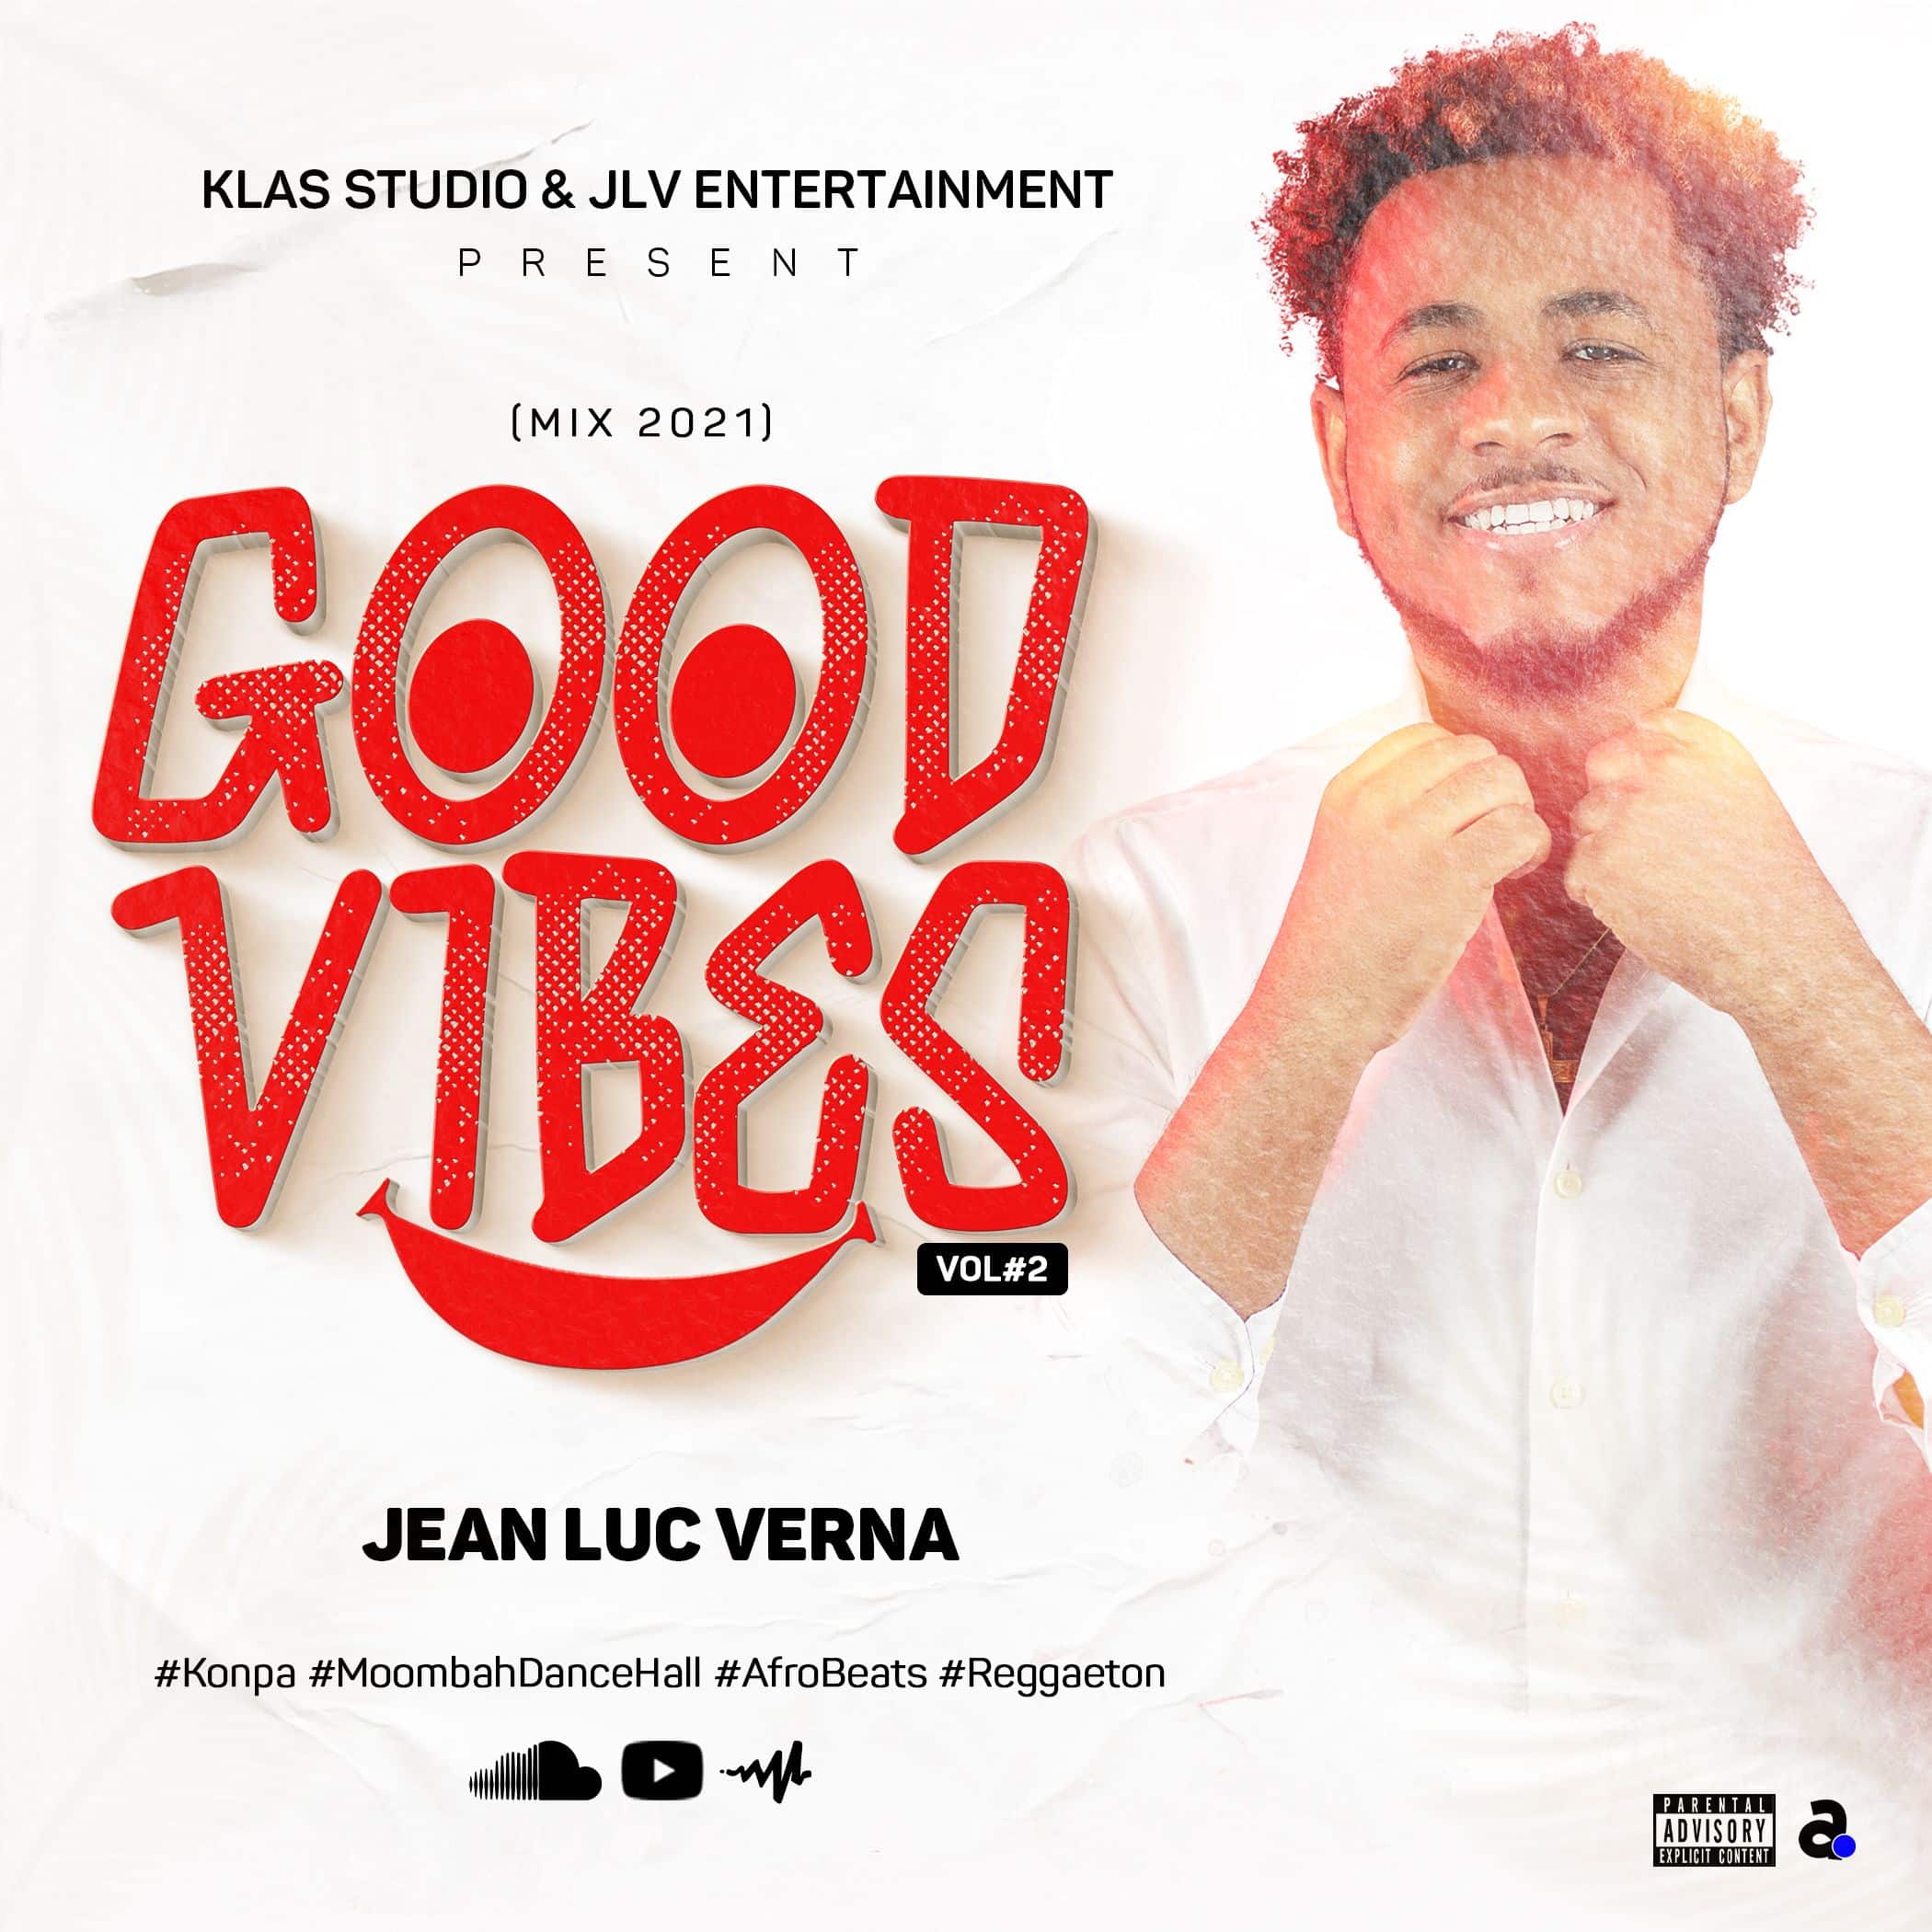 Good Vibes Vol2 Jean Luc Verna Mix 2021 ›